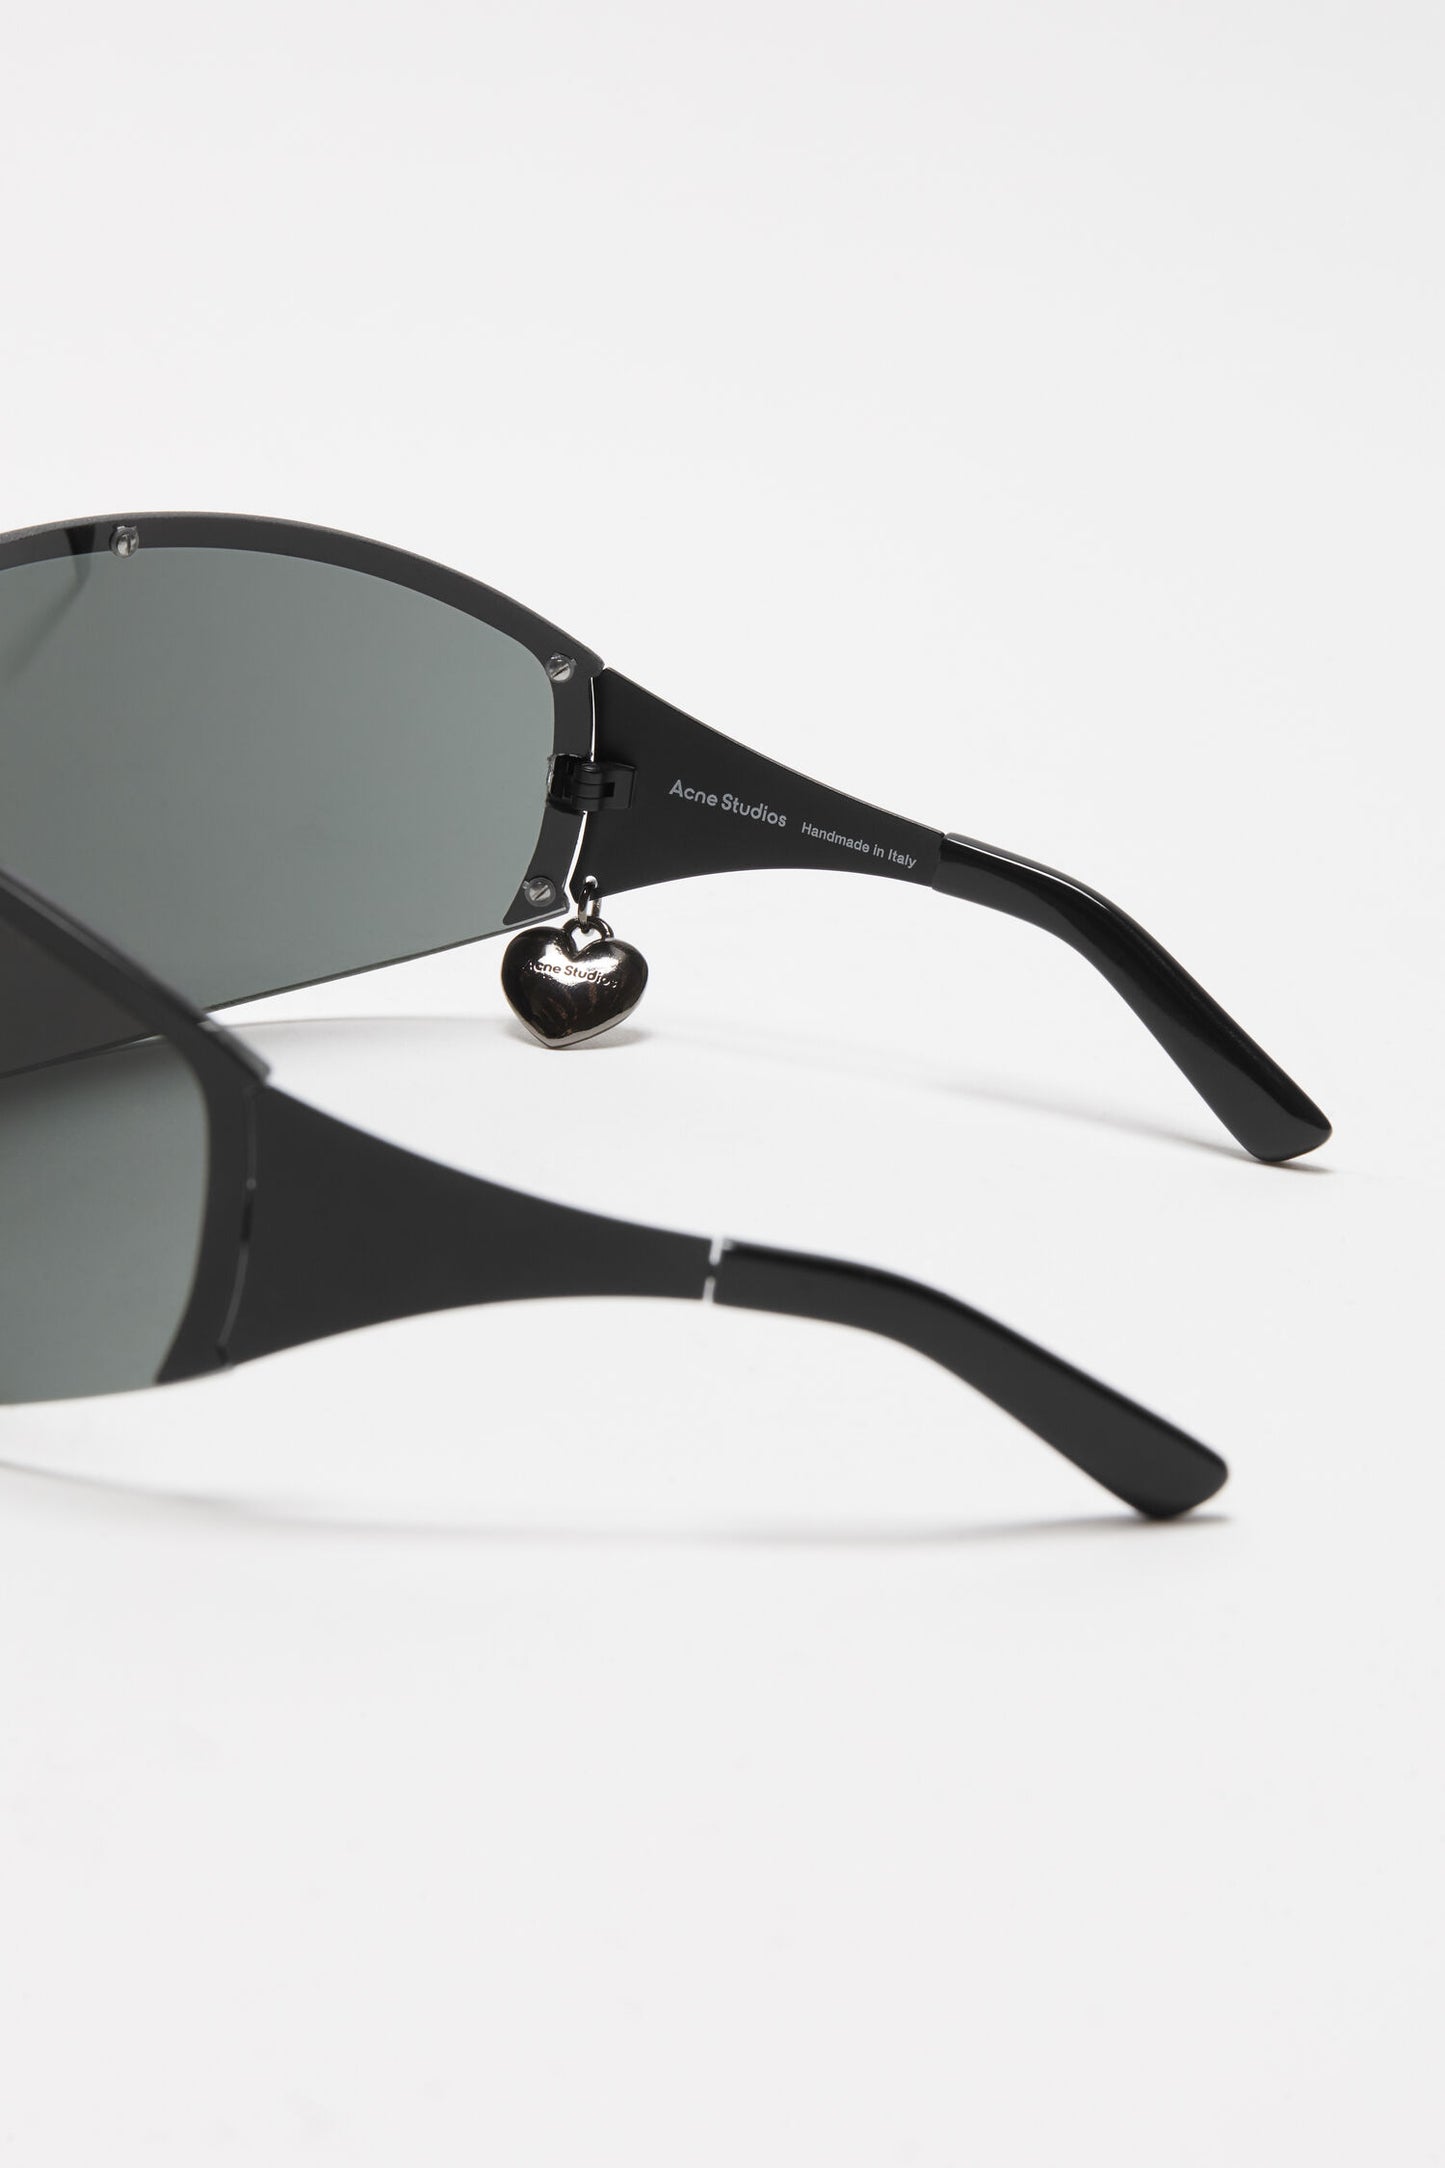 Metal Frame Eyewear, Black, Sunglasses 